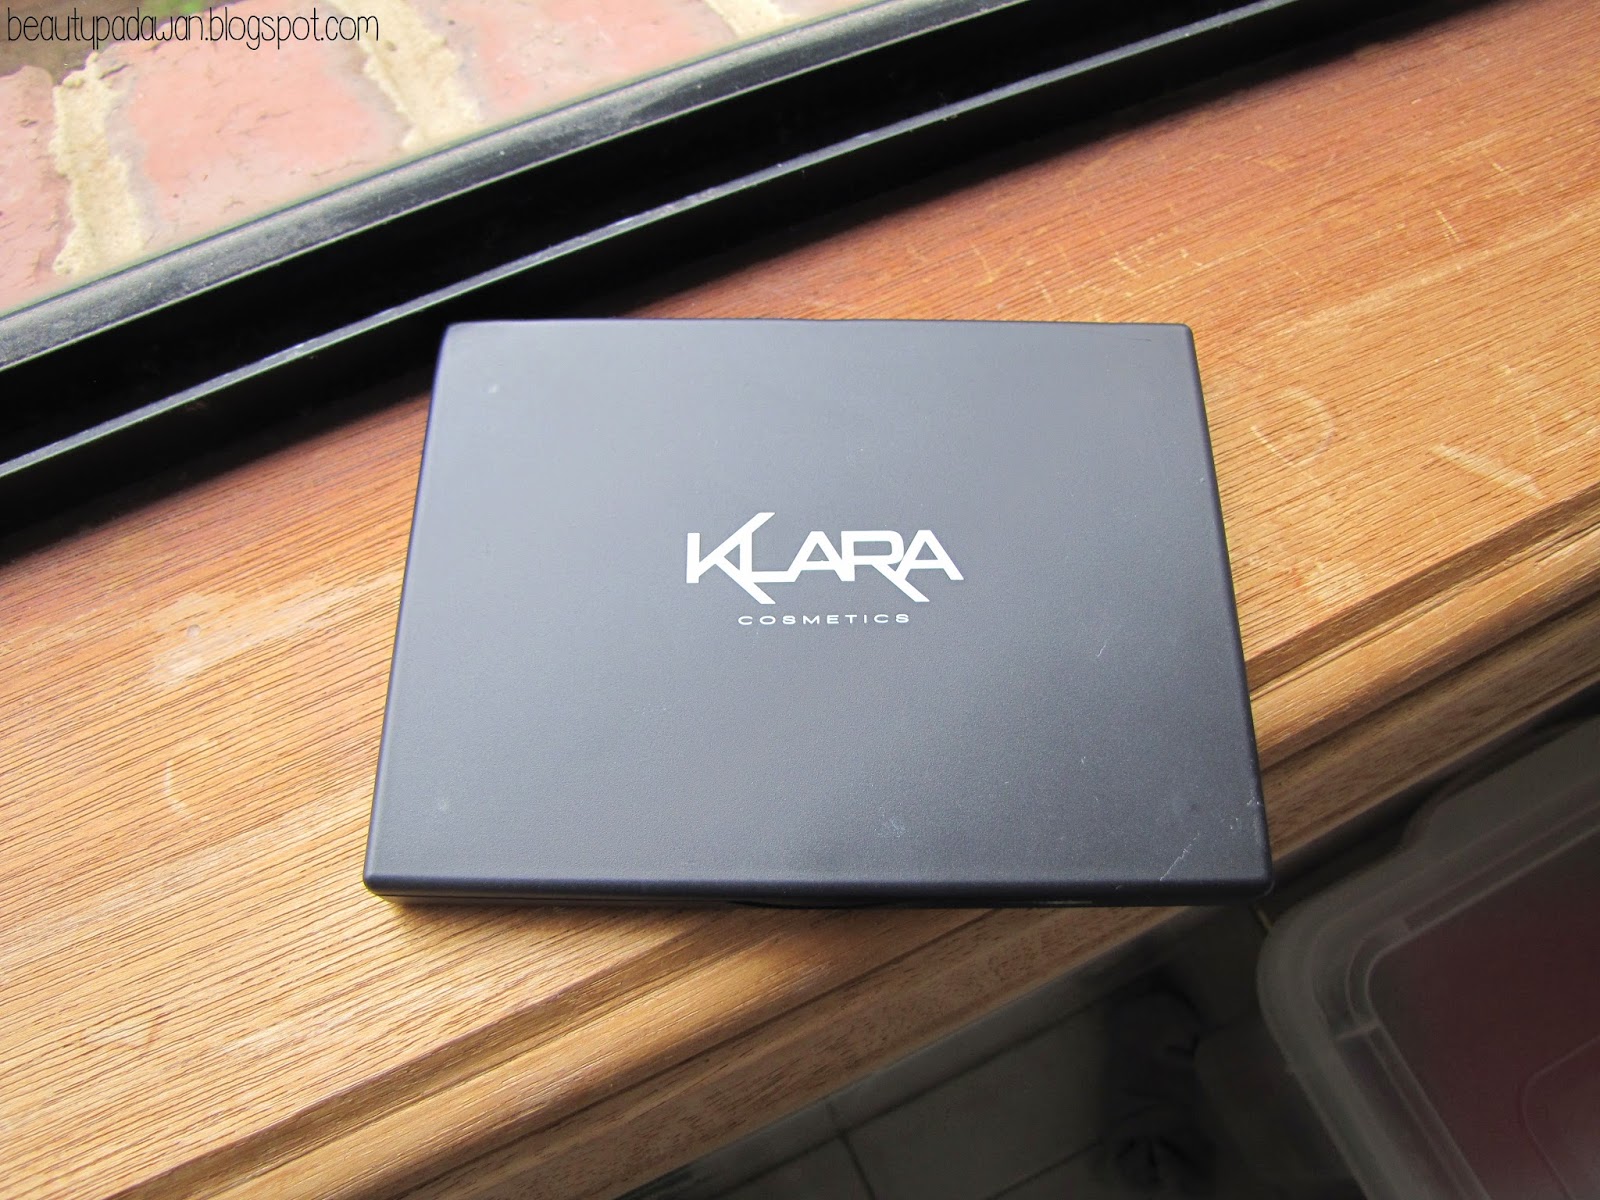 Klara Cosmetics eye shadow palette